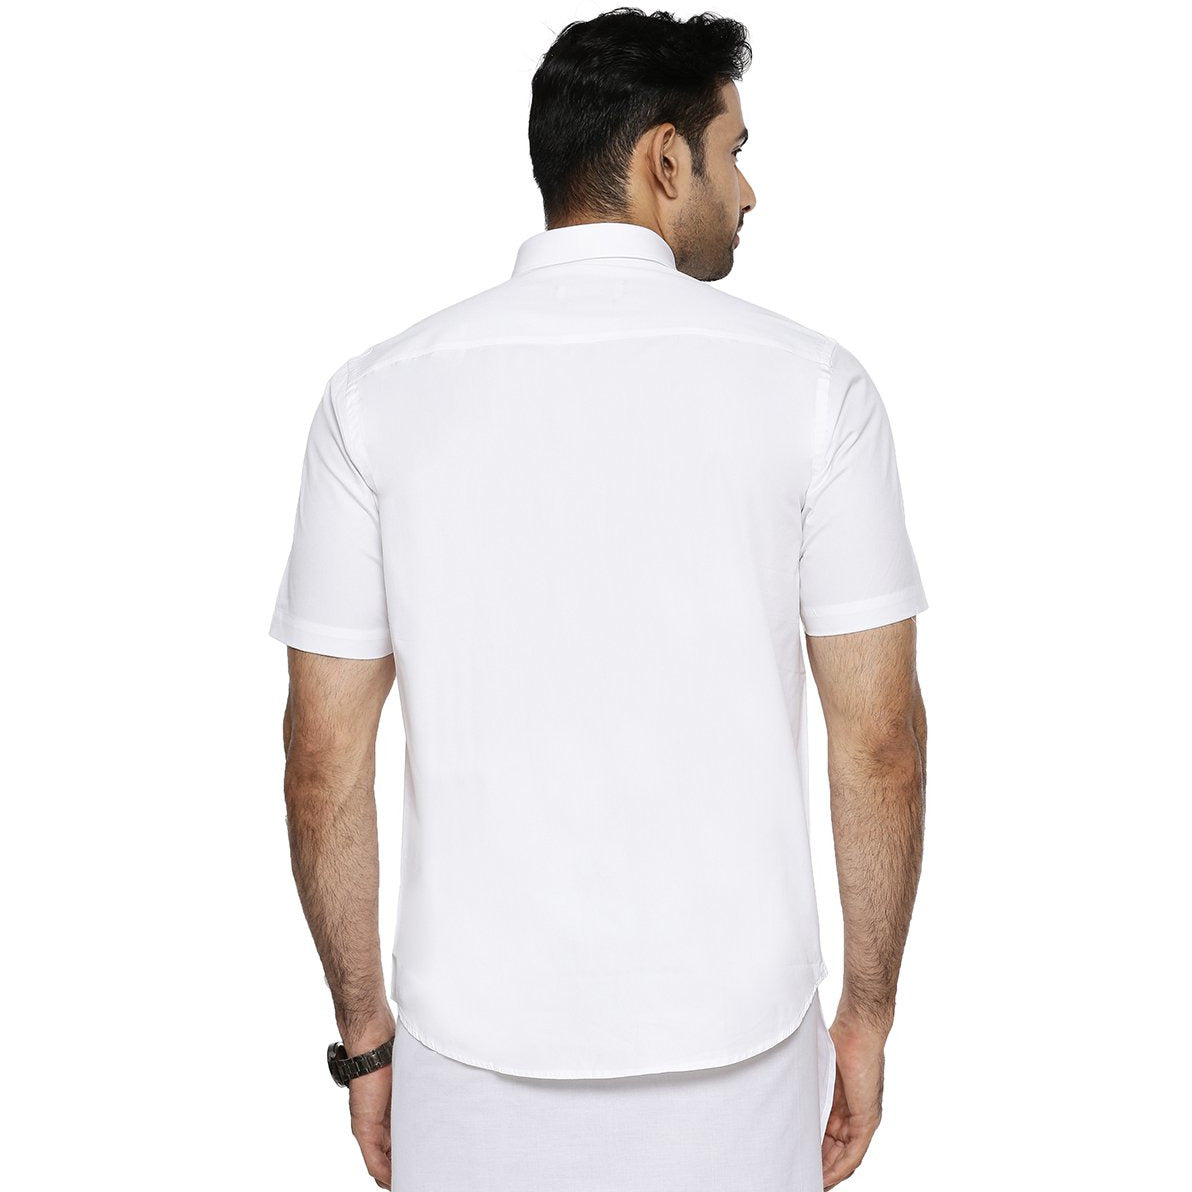 Mens Cotton White Shirt Half Sleeves Luxury Cotton-Back view